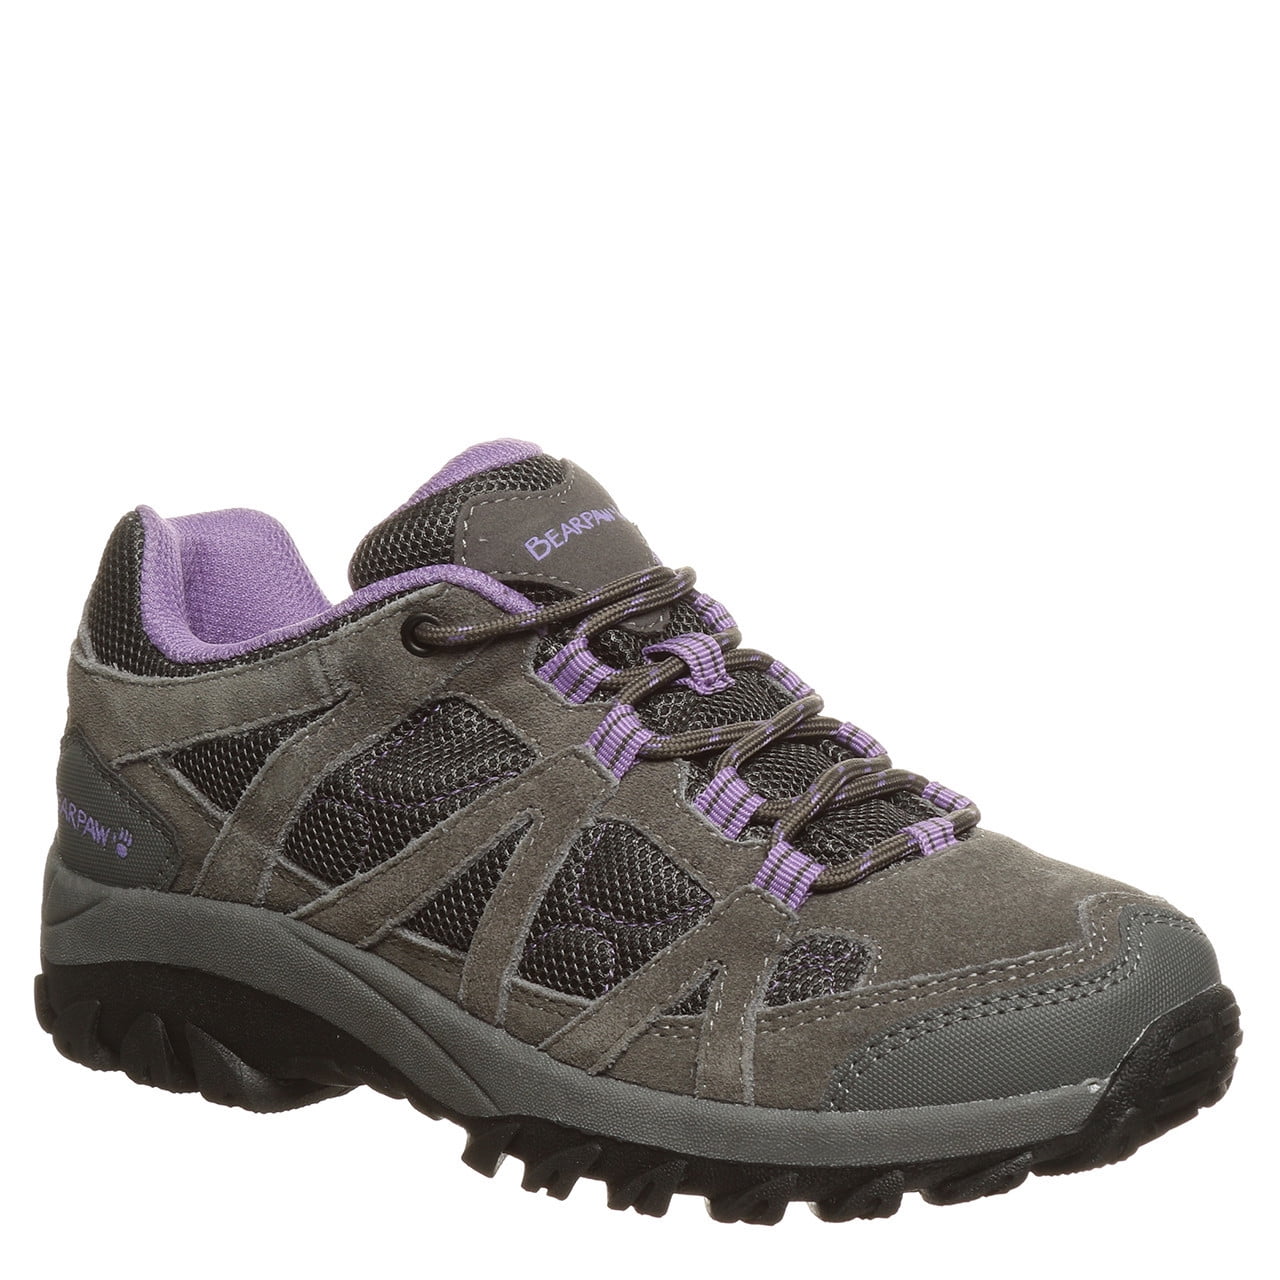 Bearpaw Women's Olympus Hiking Shoes - Medium & Wide Width - Walmart.com